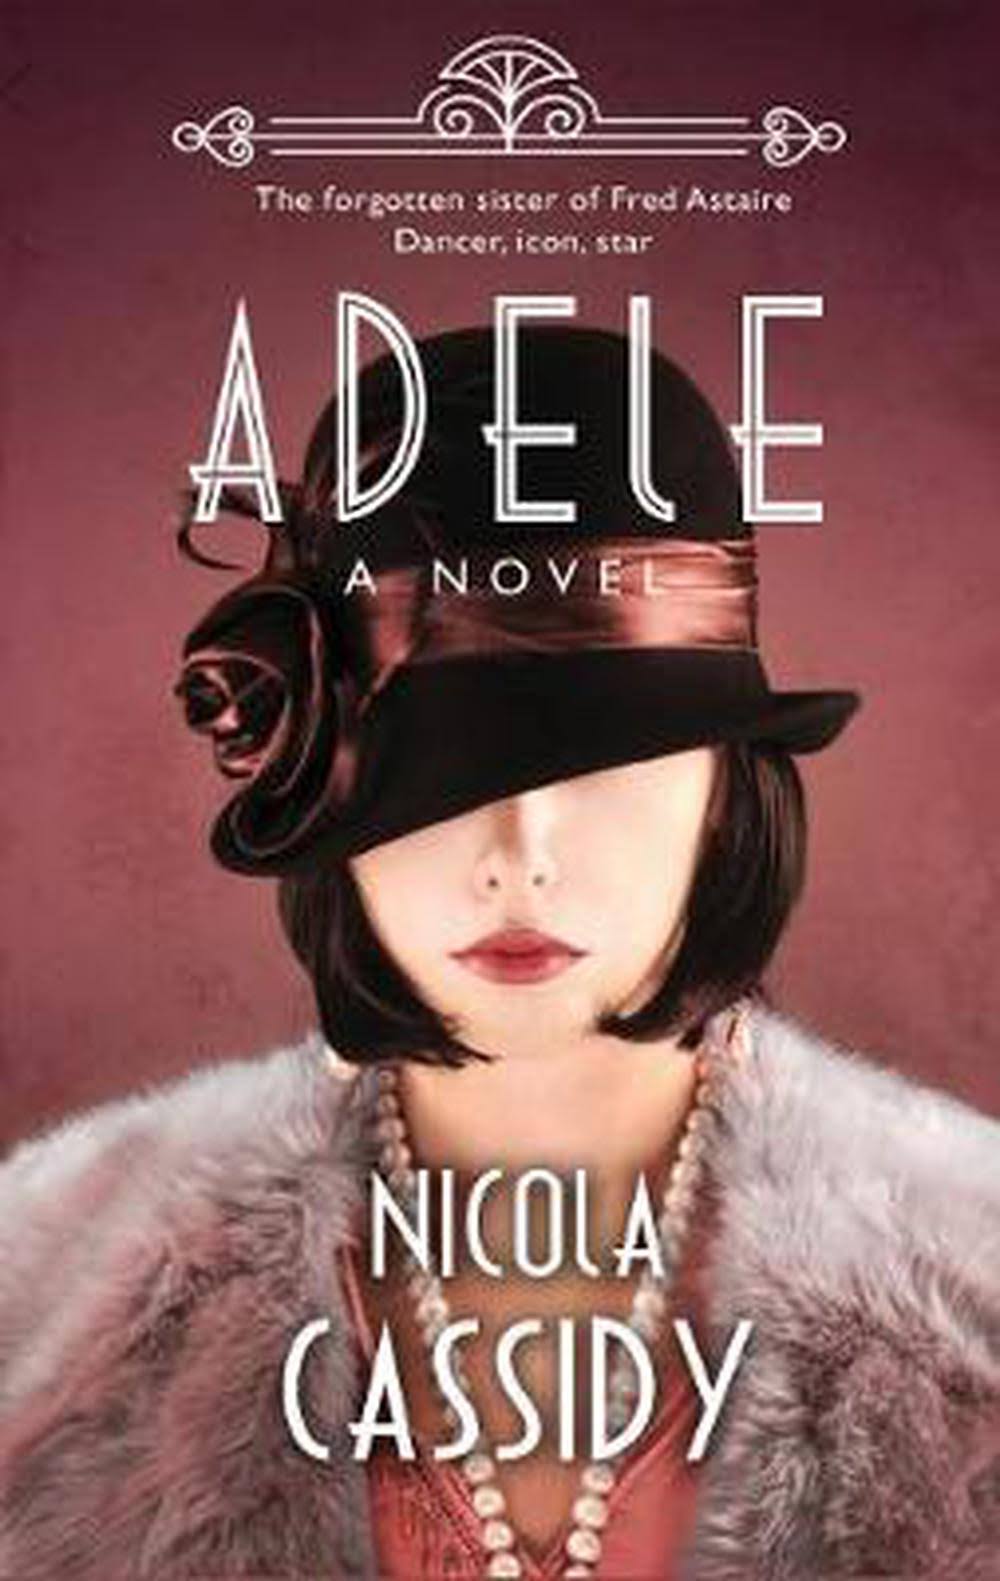 Adele by Nicola Cassidy